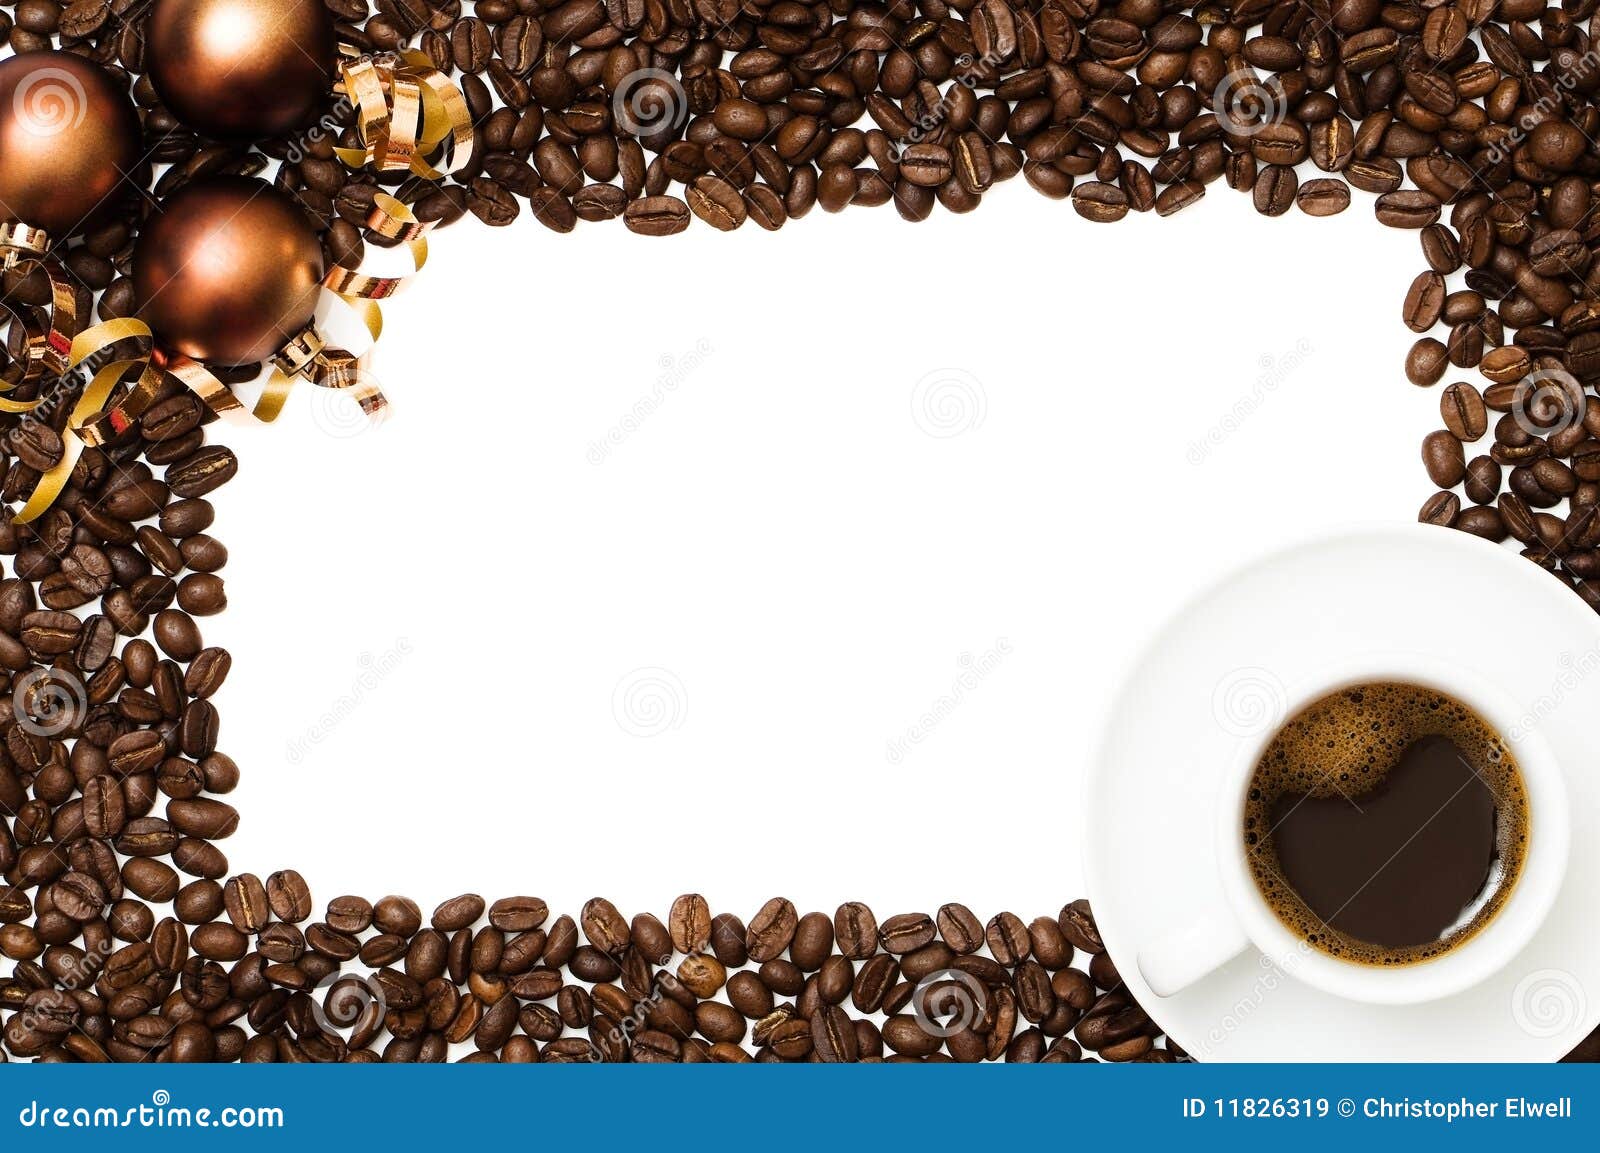 Christmas Coffee Border stock image. Image of white